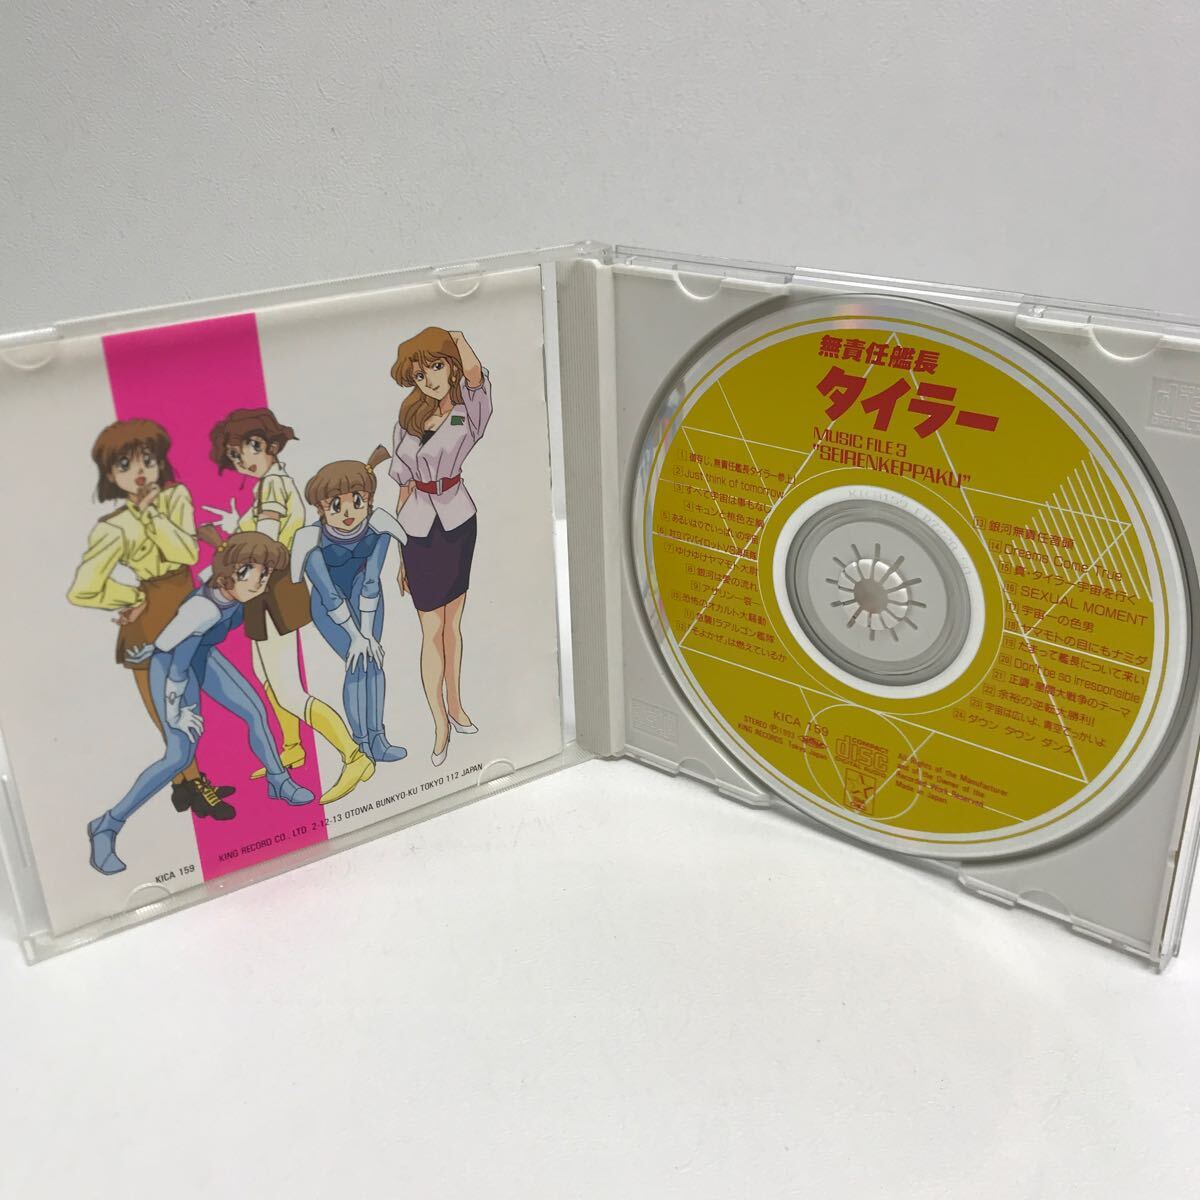 I0507A3 суммировать * Musekinin Kanchou Tylor CD 4 шт комплект музыка аниме песни из аниме / MUSIC FILE SENTEISSYOU / FILE 2 ICHIRENTAKUSYOU др. 